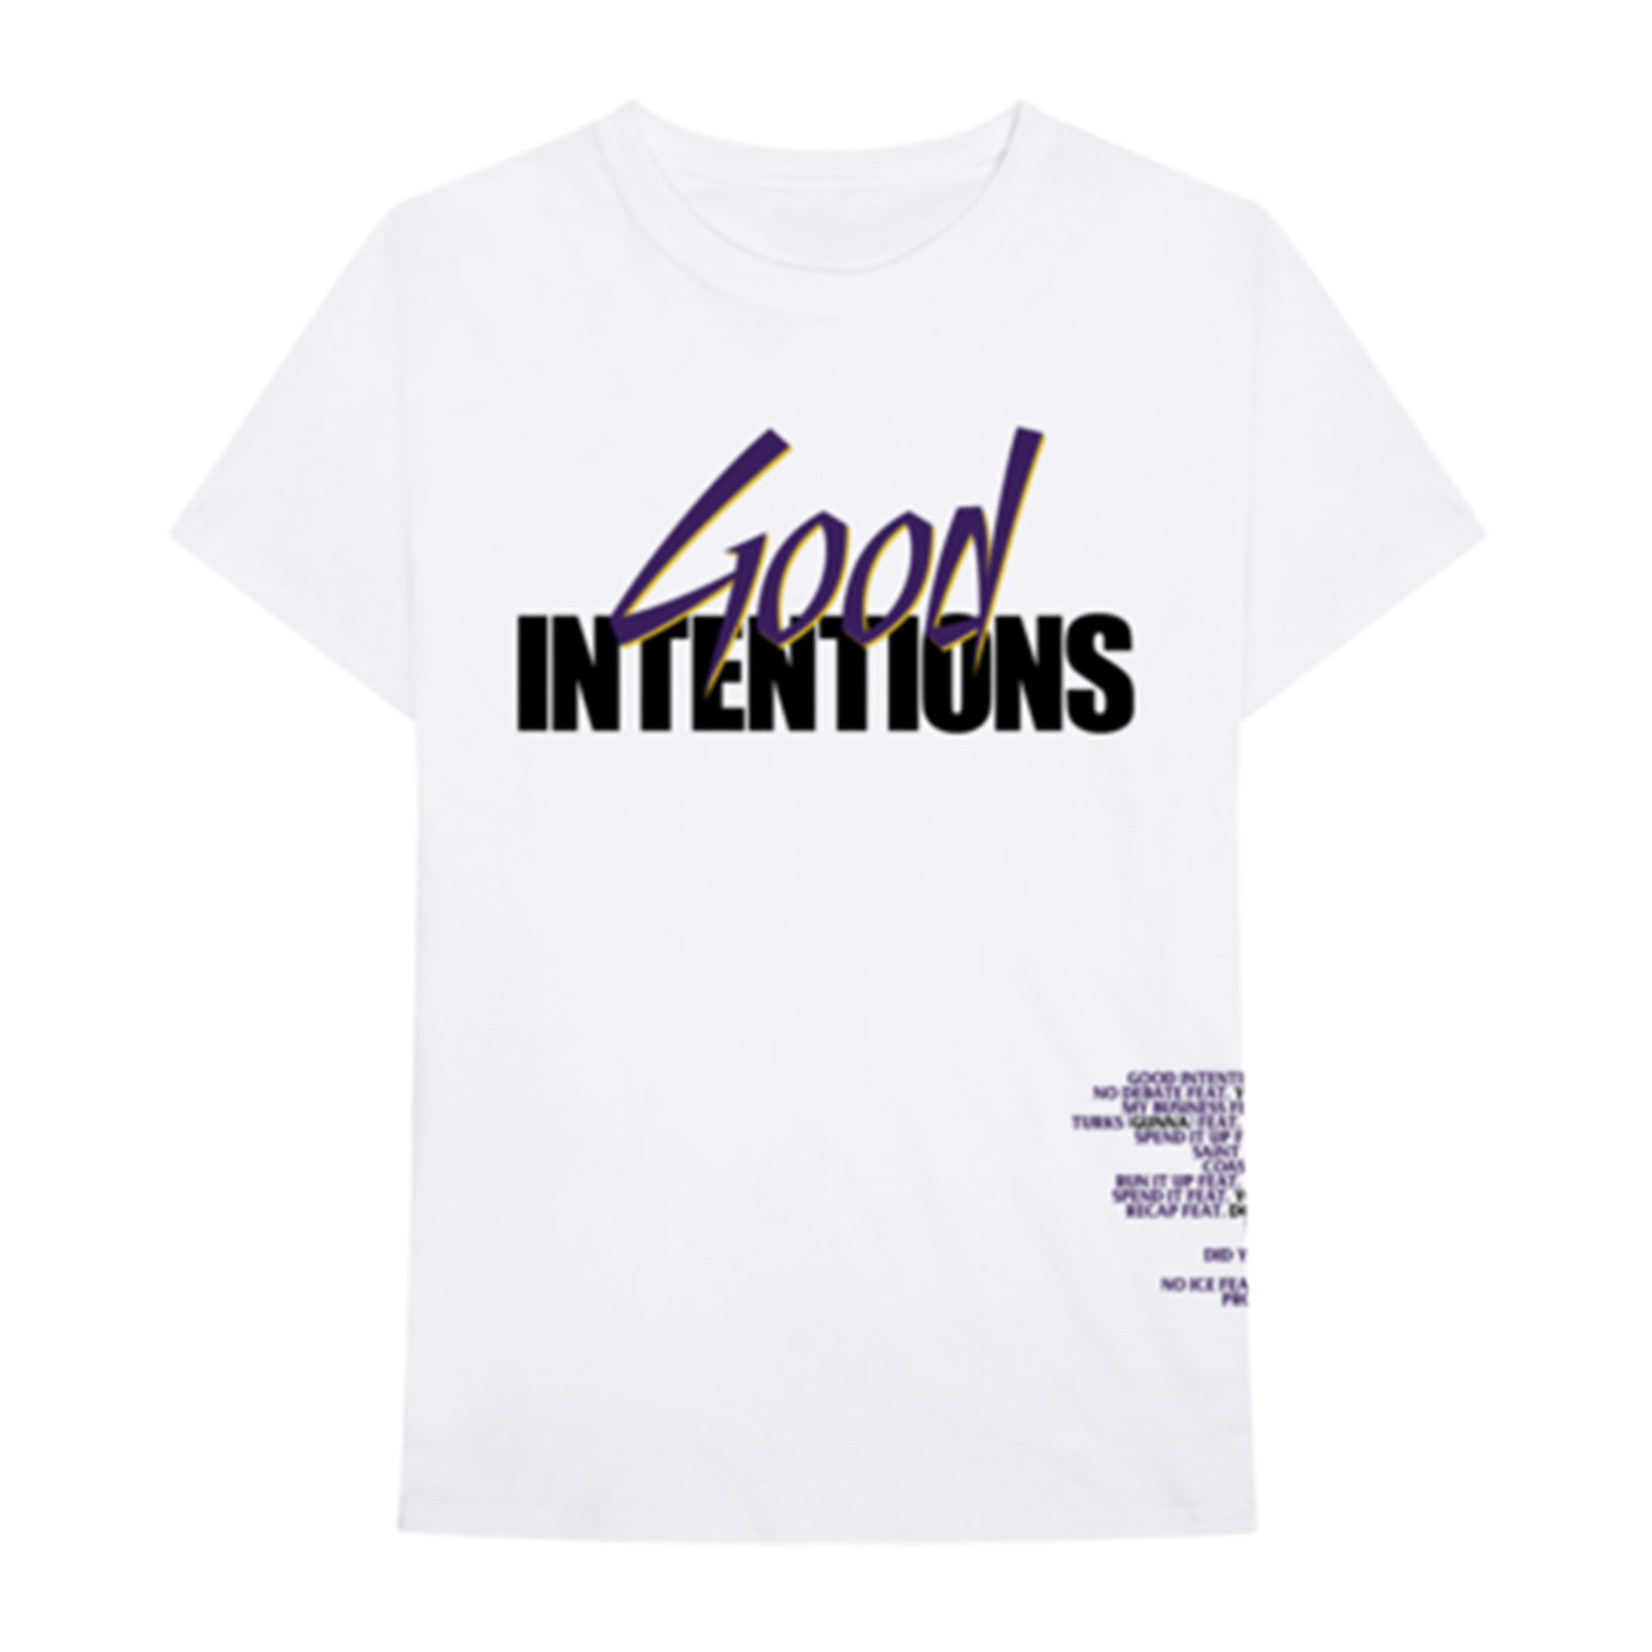 Vlone Vlone x Nav Dove Good Intentions T-Shirt (C)